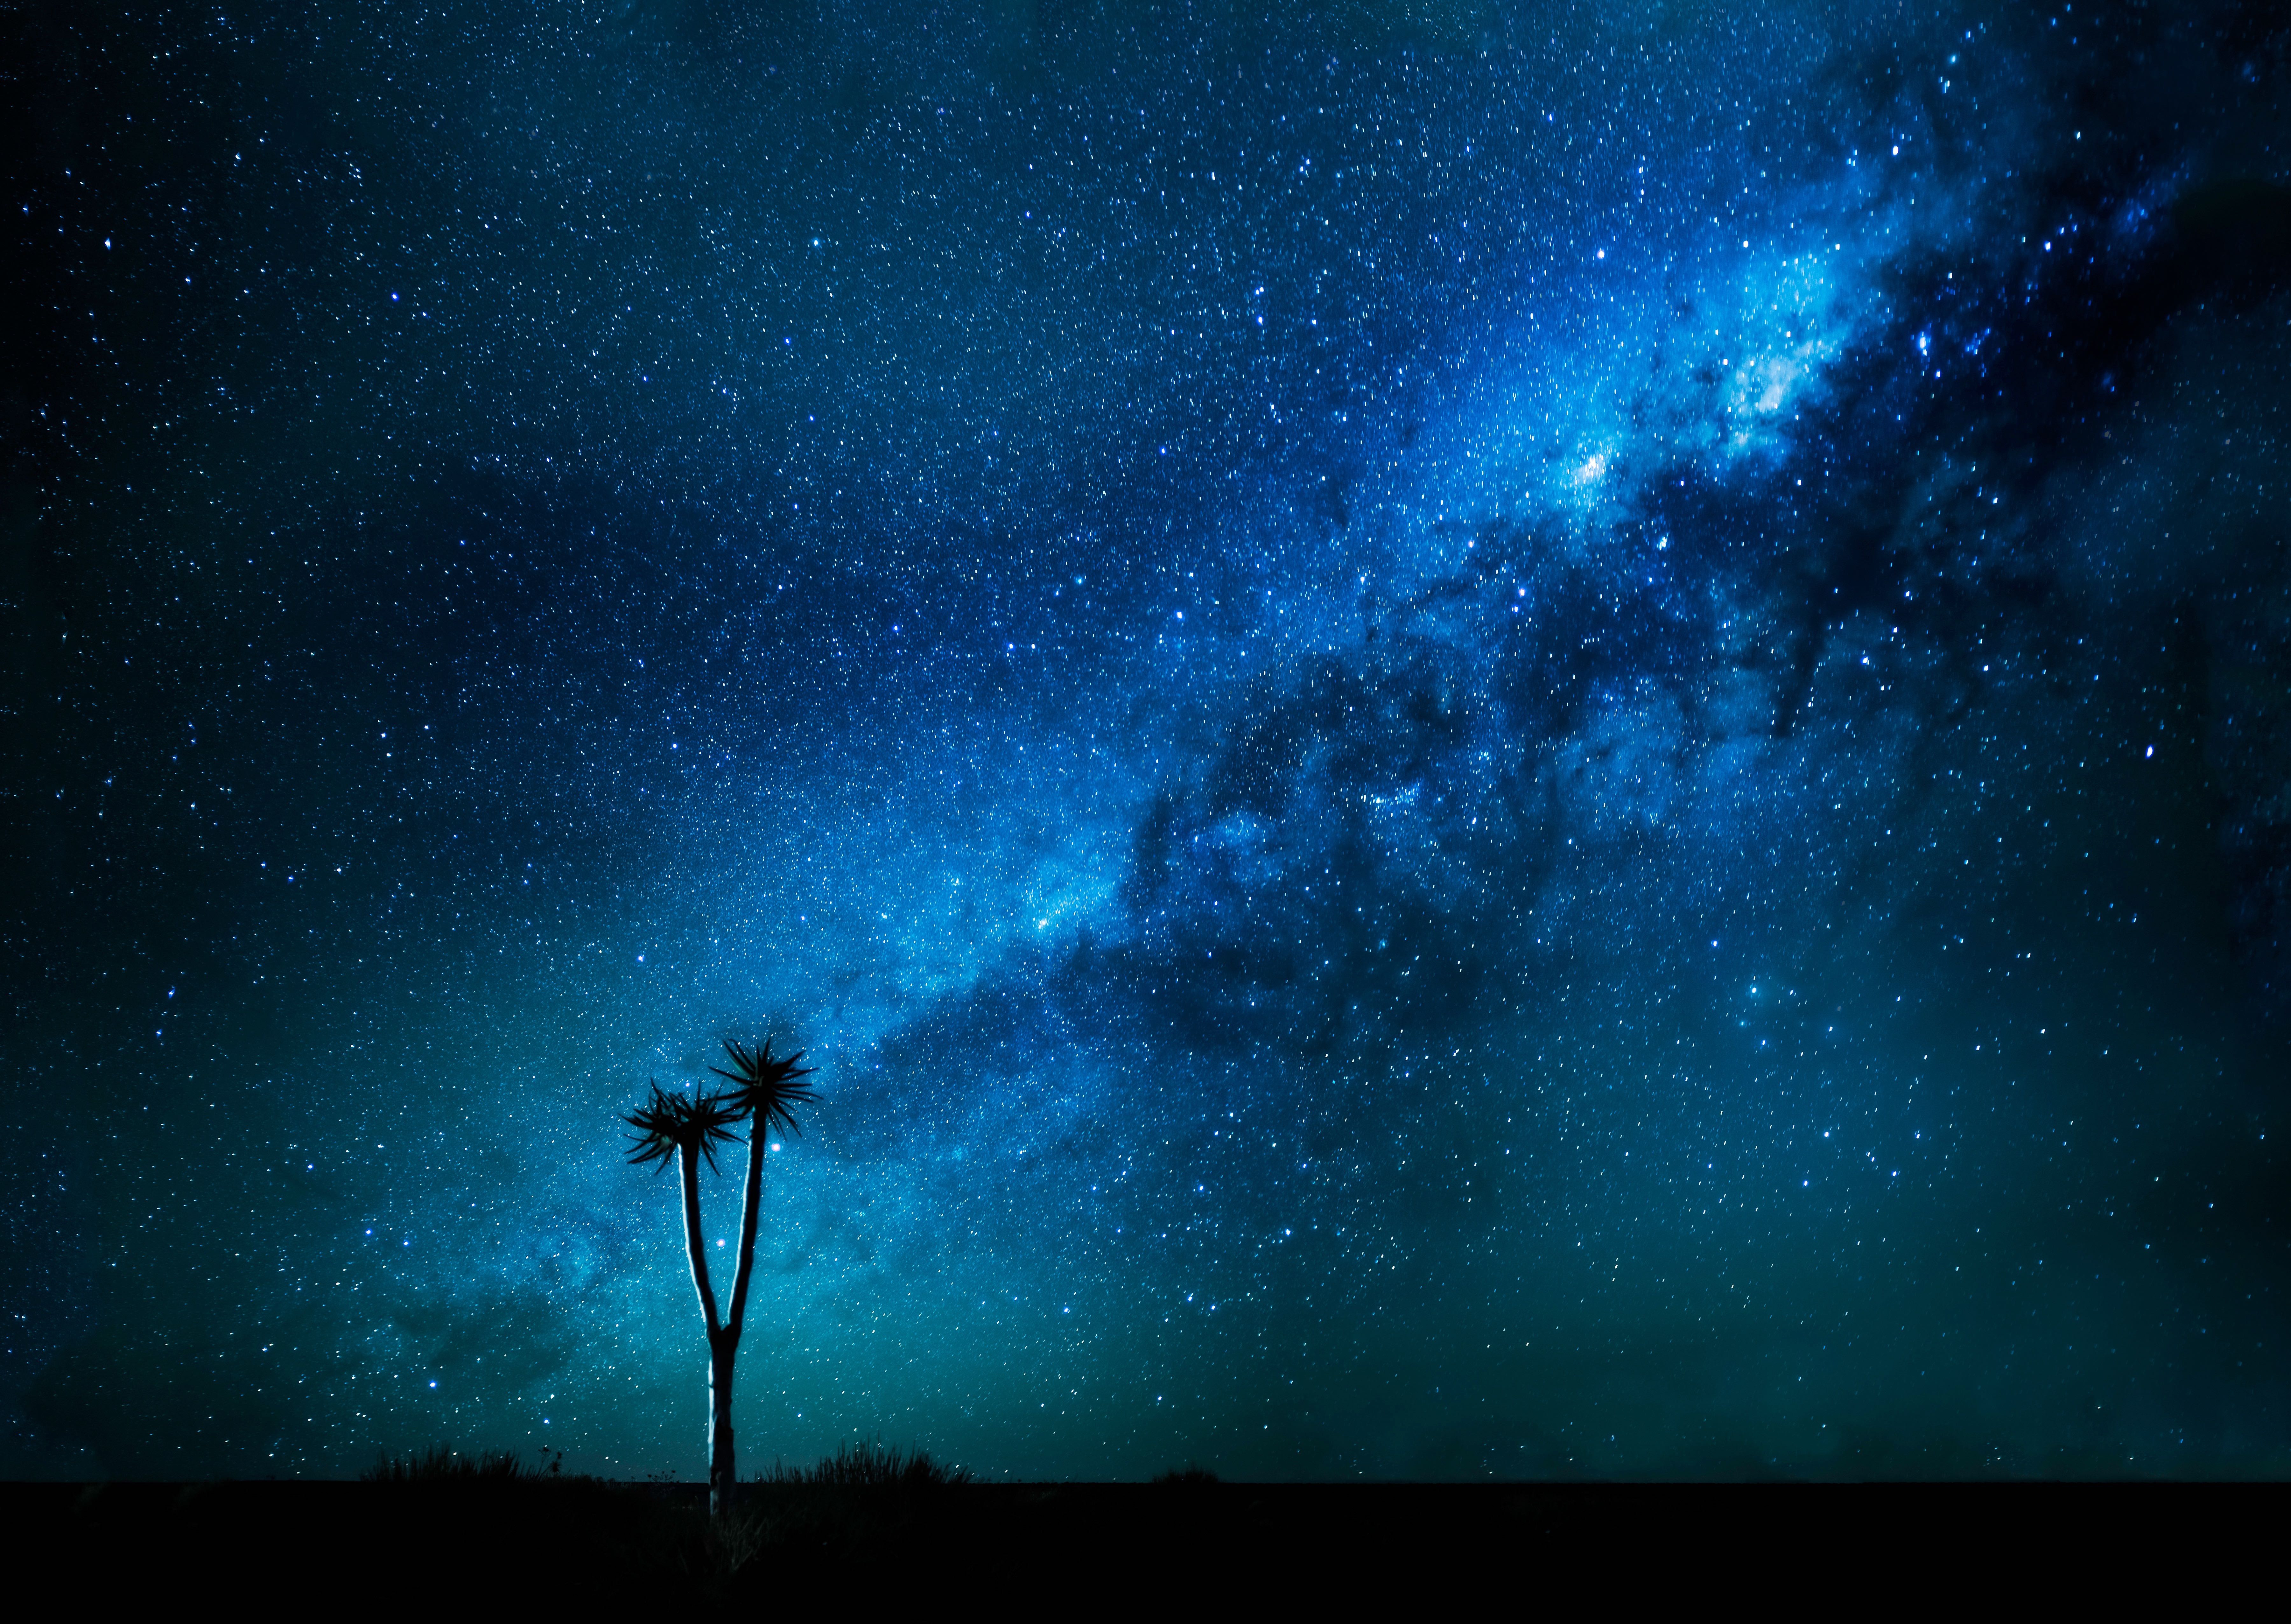 universum wallpaper 4k,himmel,atmosphäre,nacht,astronomisches objekt,platz